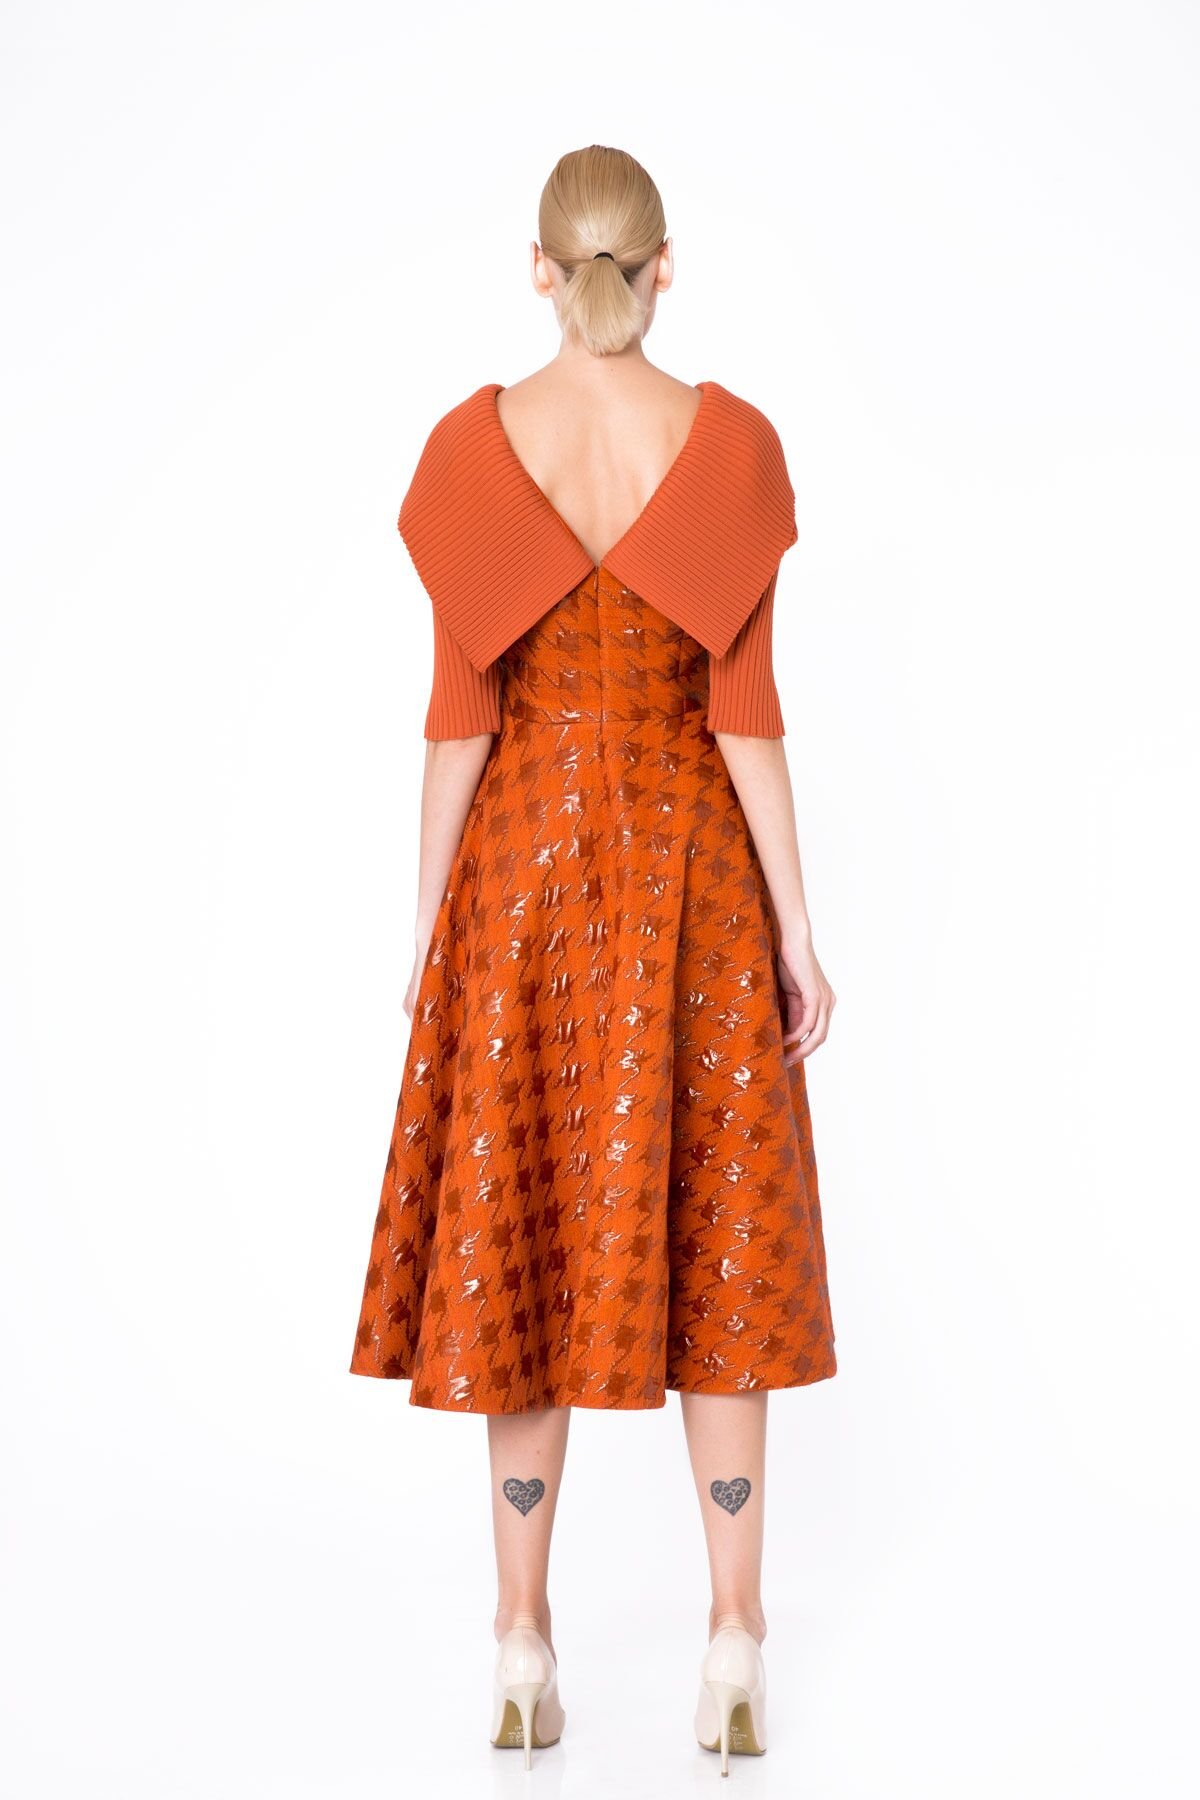 Knitwear Detailed Jacquard Fabric Orange Flared Dress